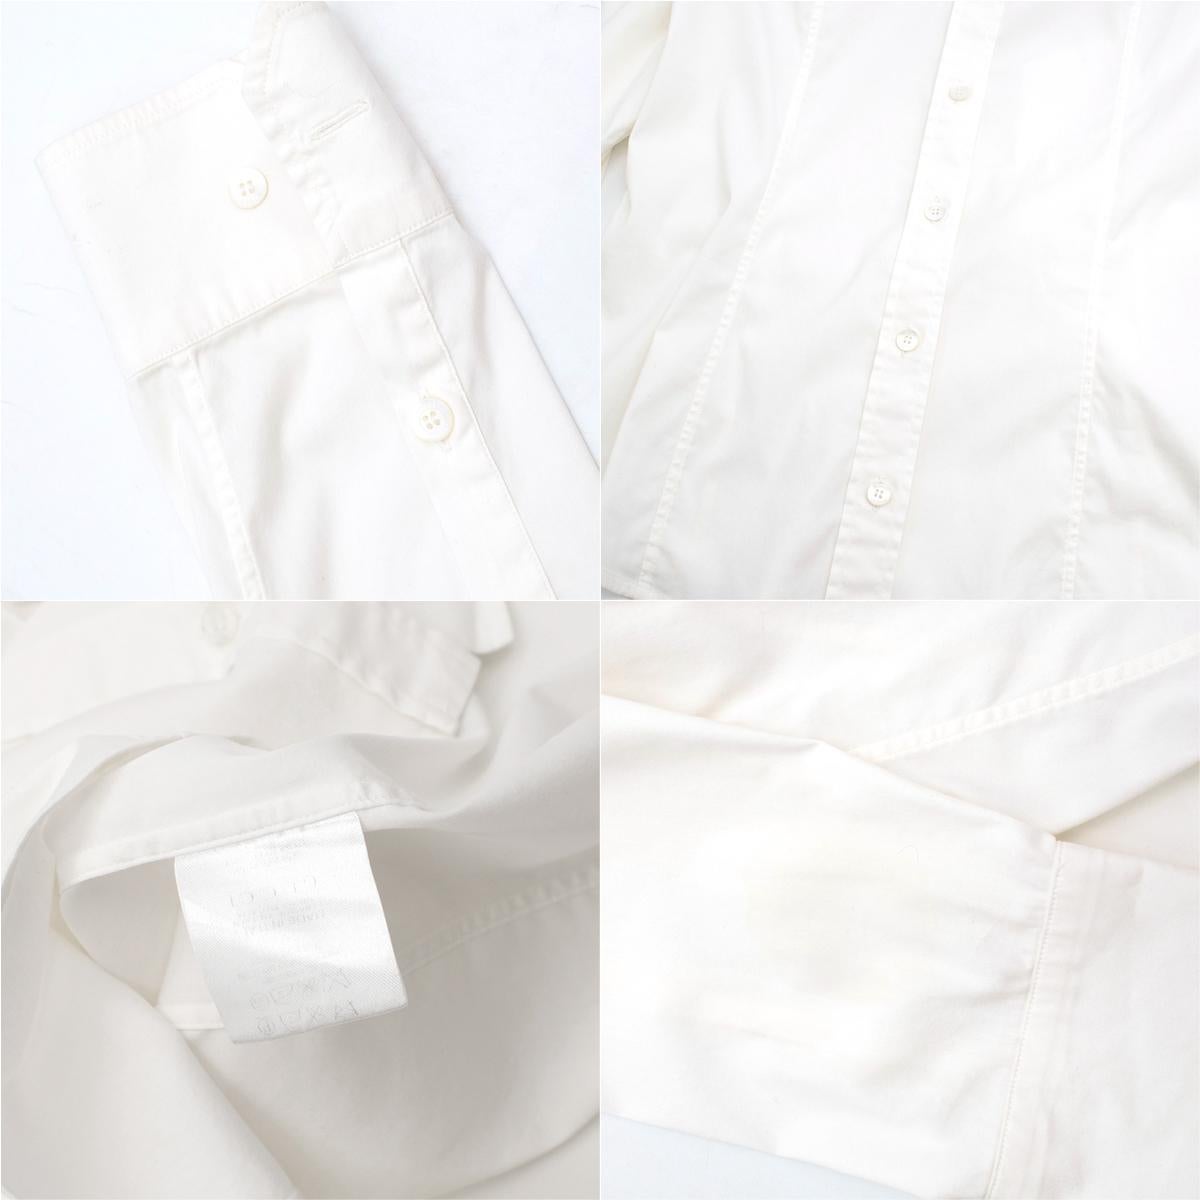 Gucci White Cotton Shirt W/ Epaulettes - Size US 2 1